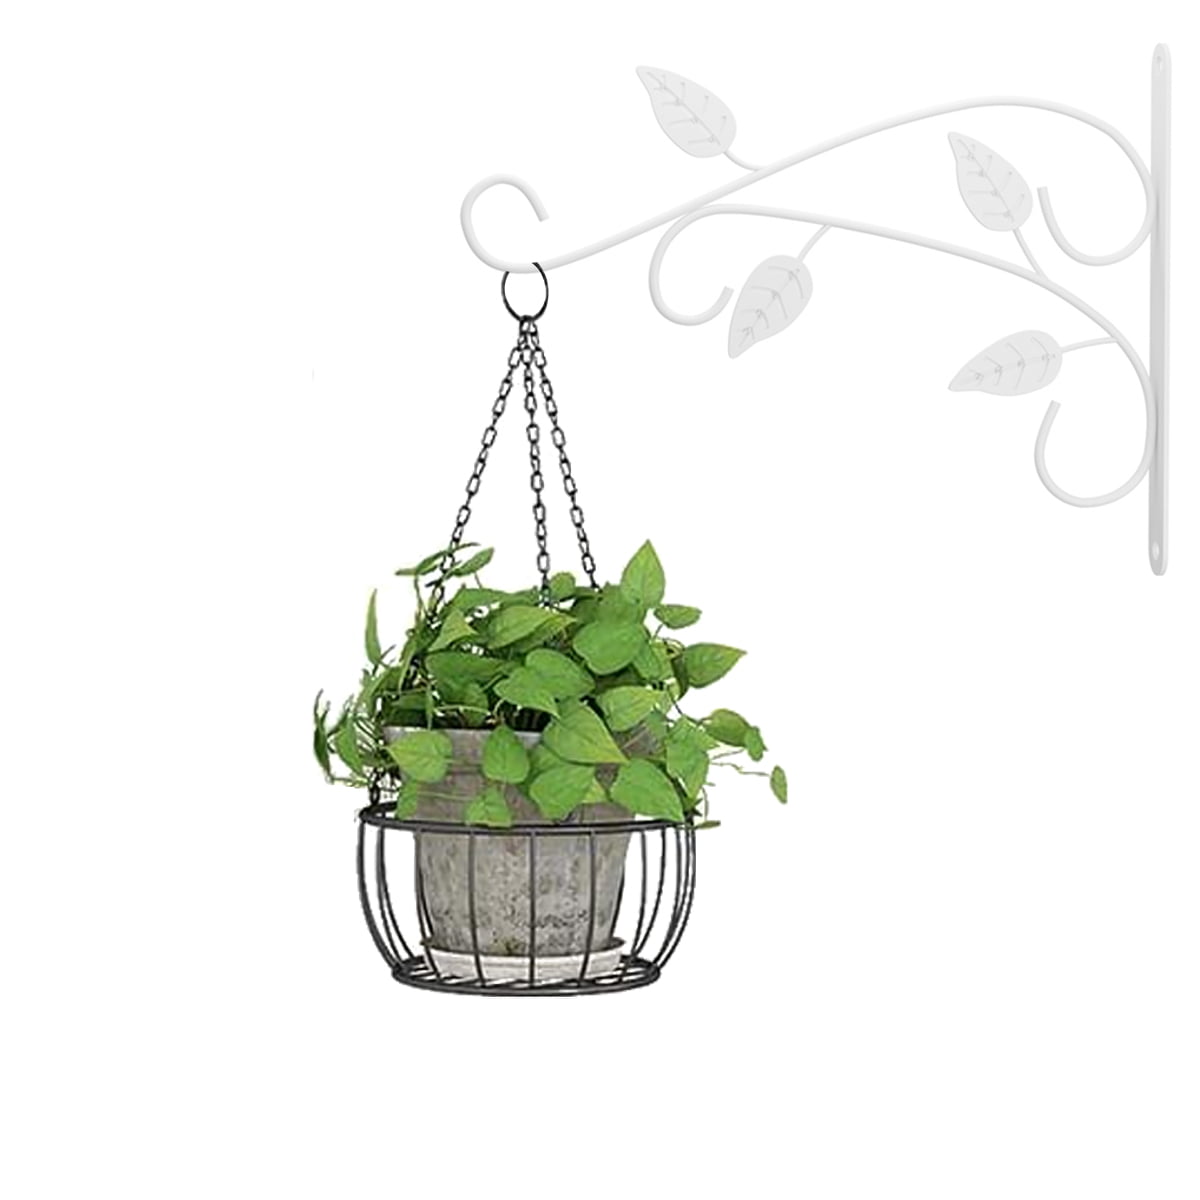 Details about   Planter Hanging Basket Plant Holder Metal Frame With Chain Garden Decor S/M/L 